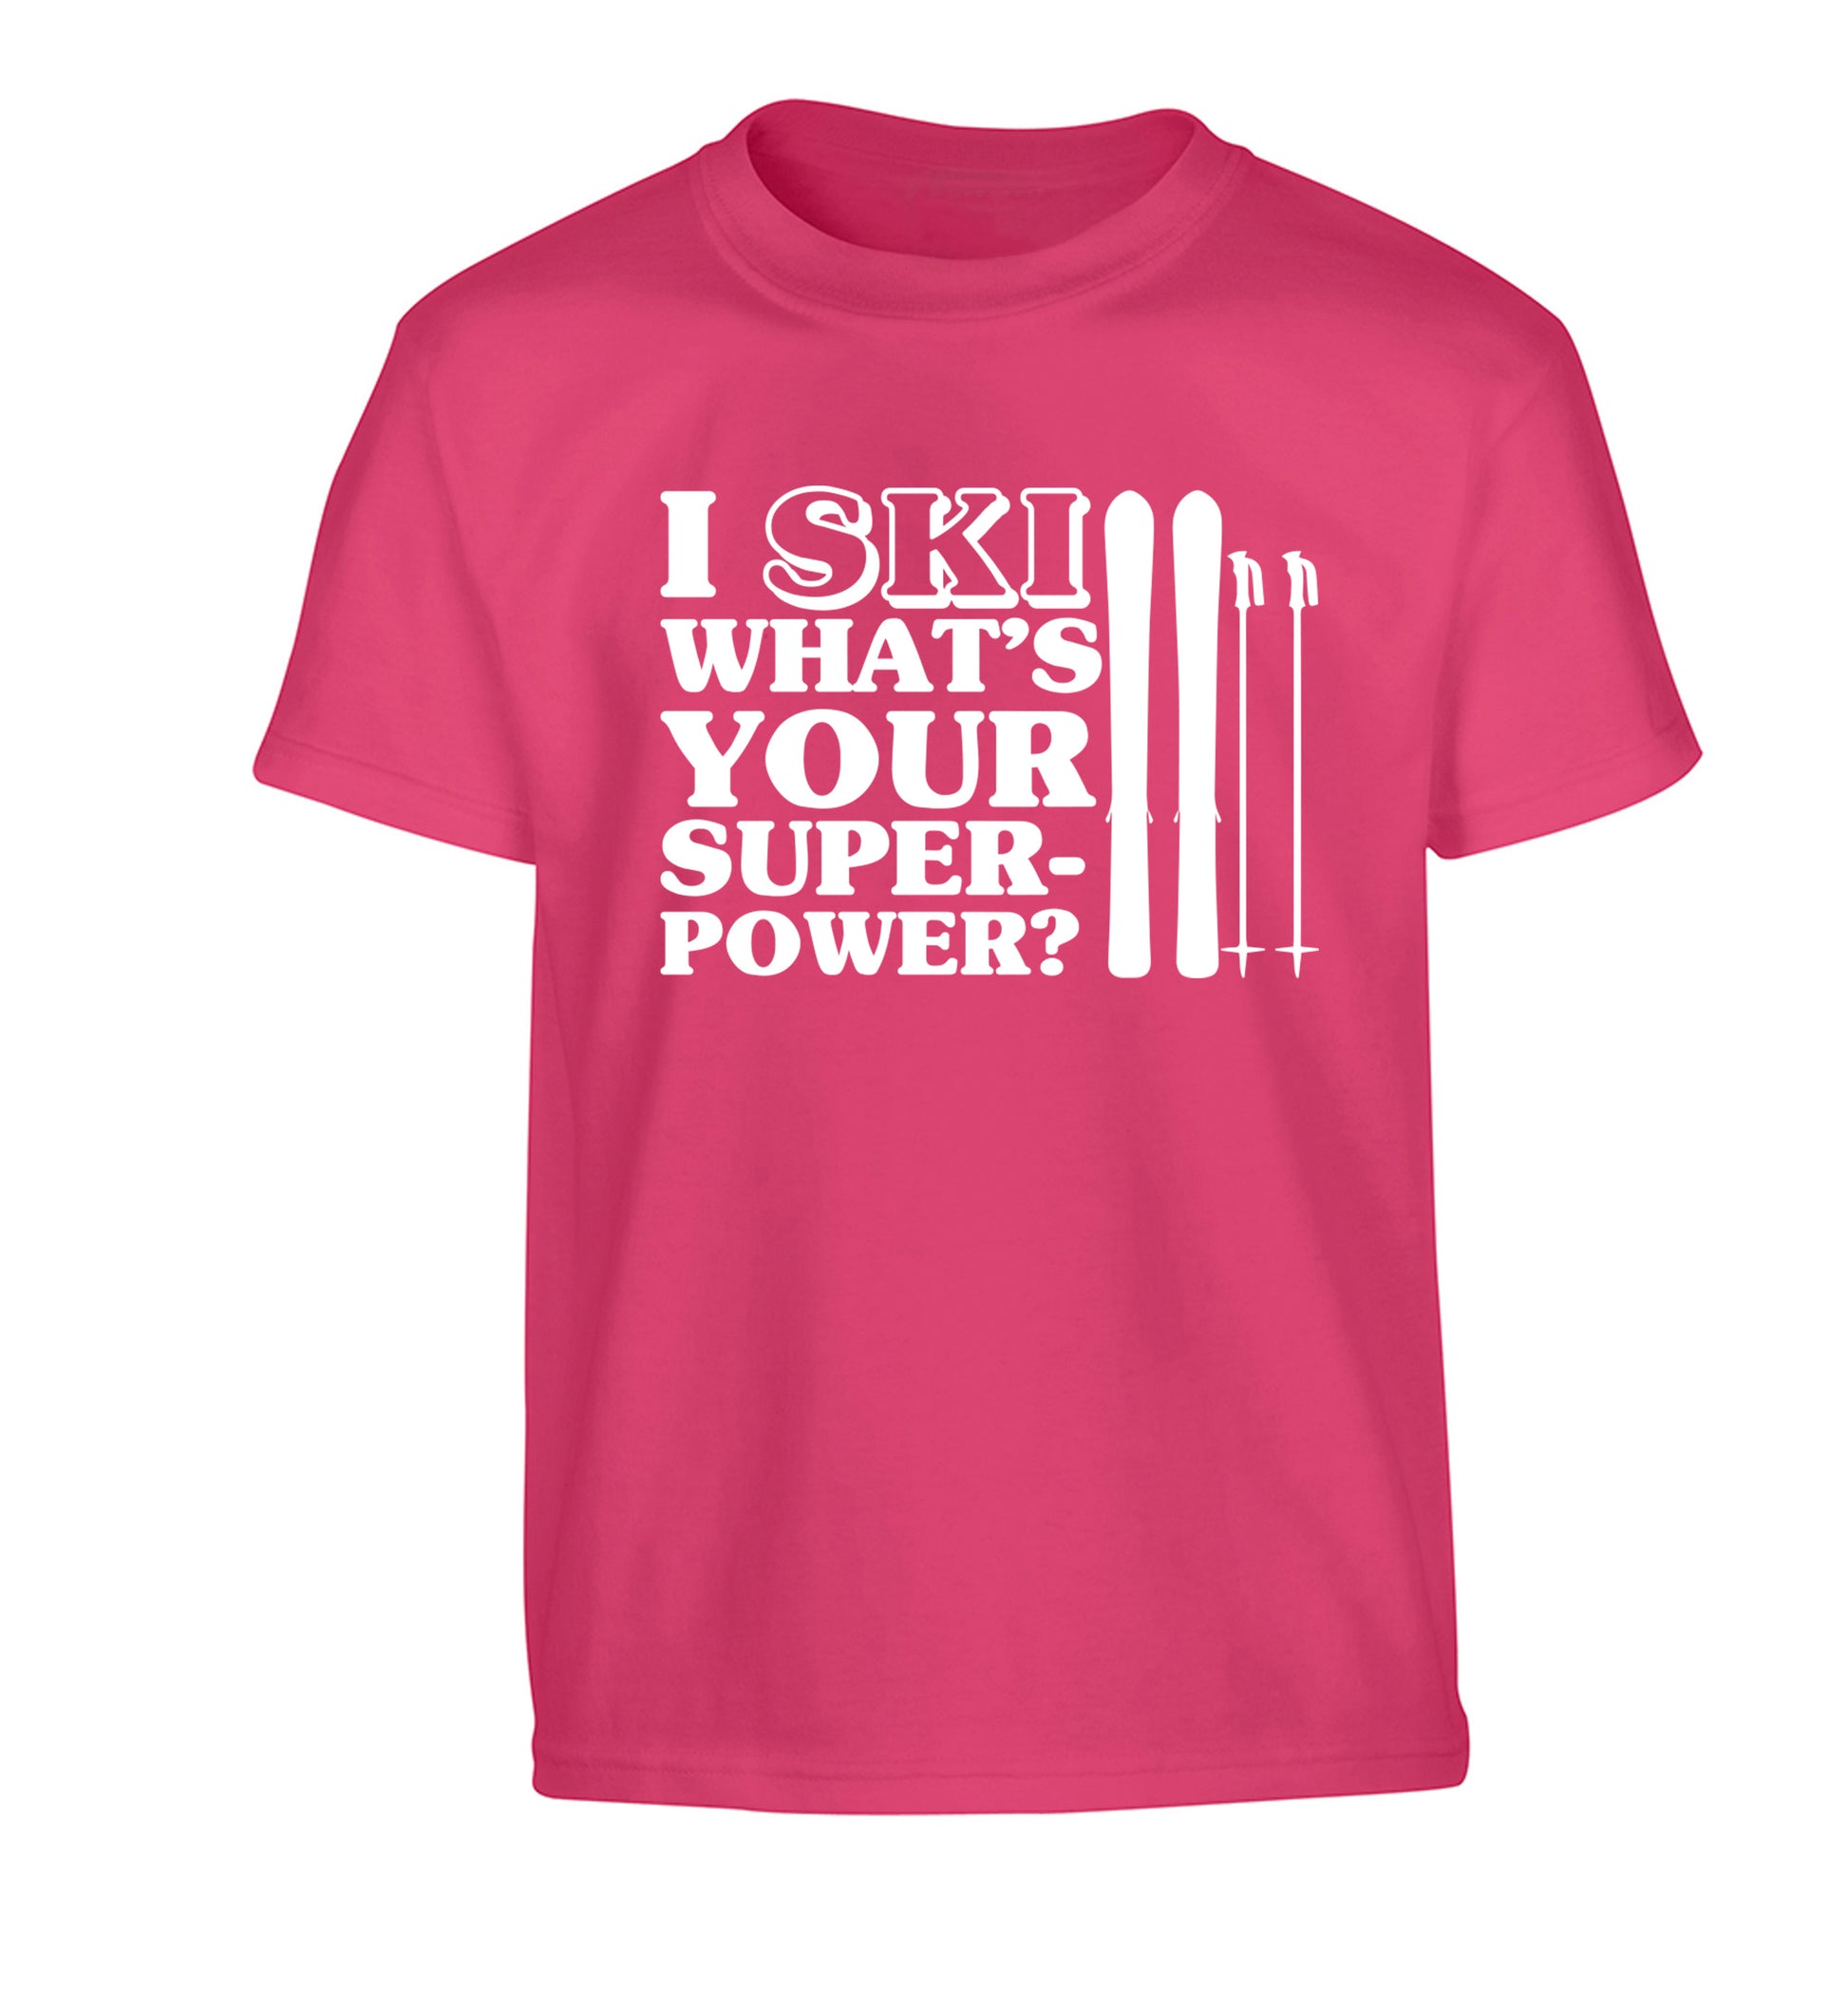 I ski what's your superpower? Children's pink Tshirt 12-14 Years